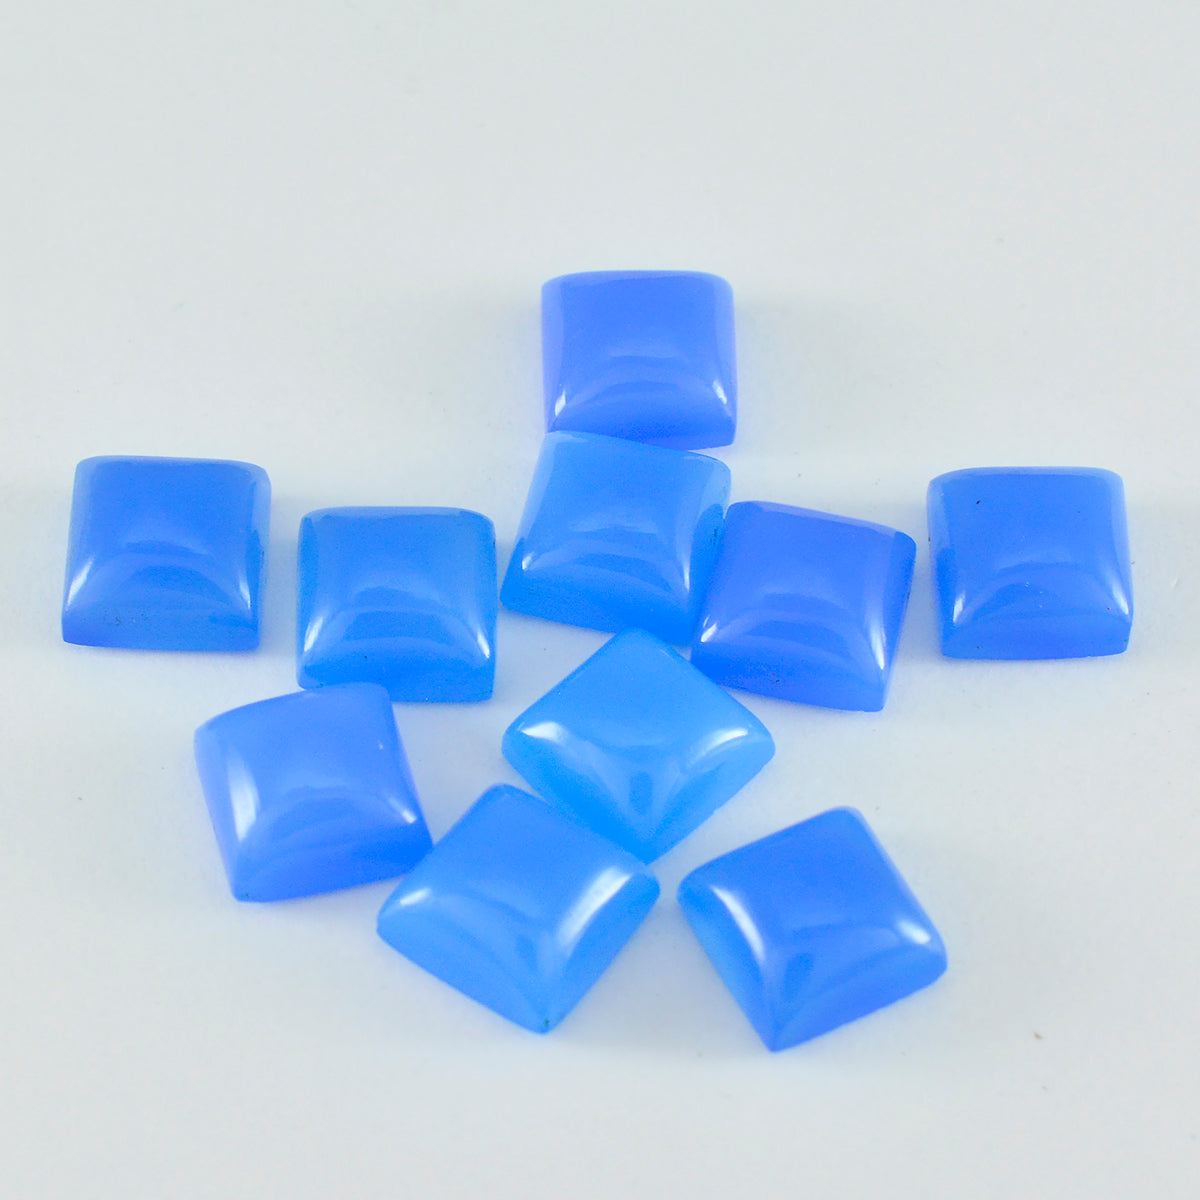 riyogems 1pc cabochon di calcedonio blu 7x7 mm di forma quadrata con gemme di eccellente qualità